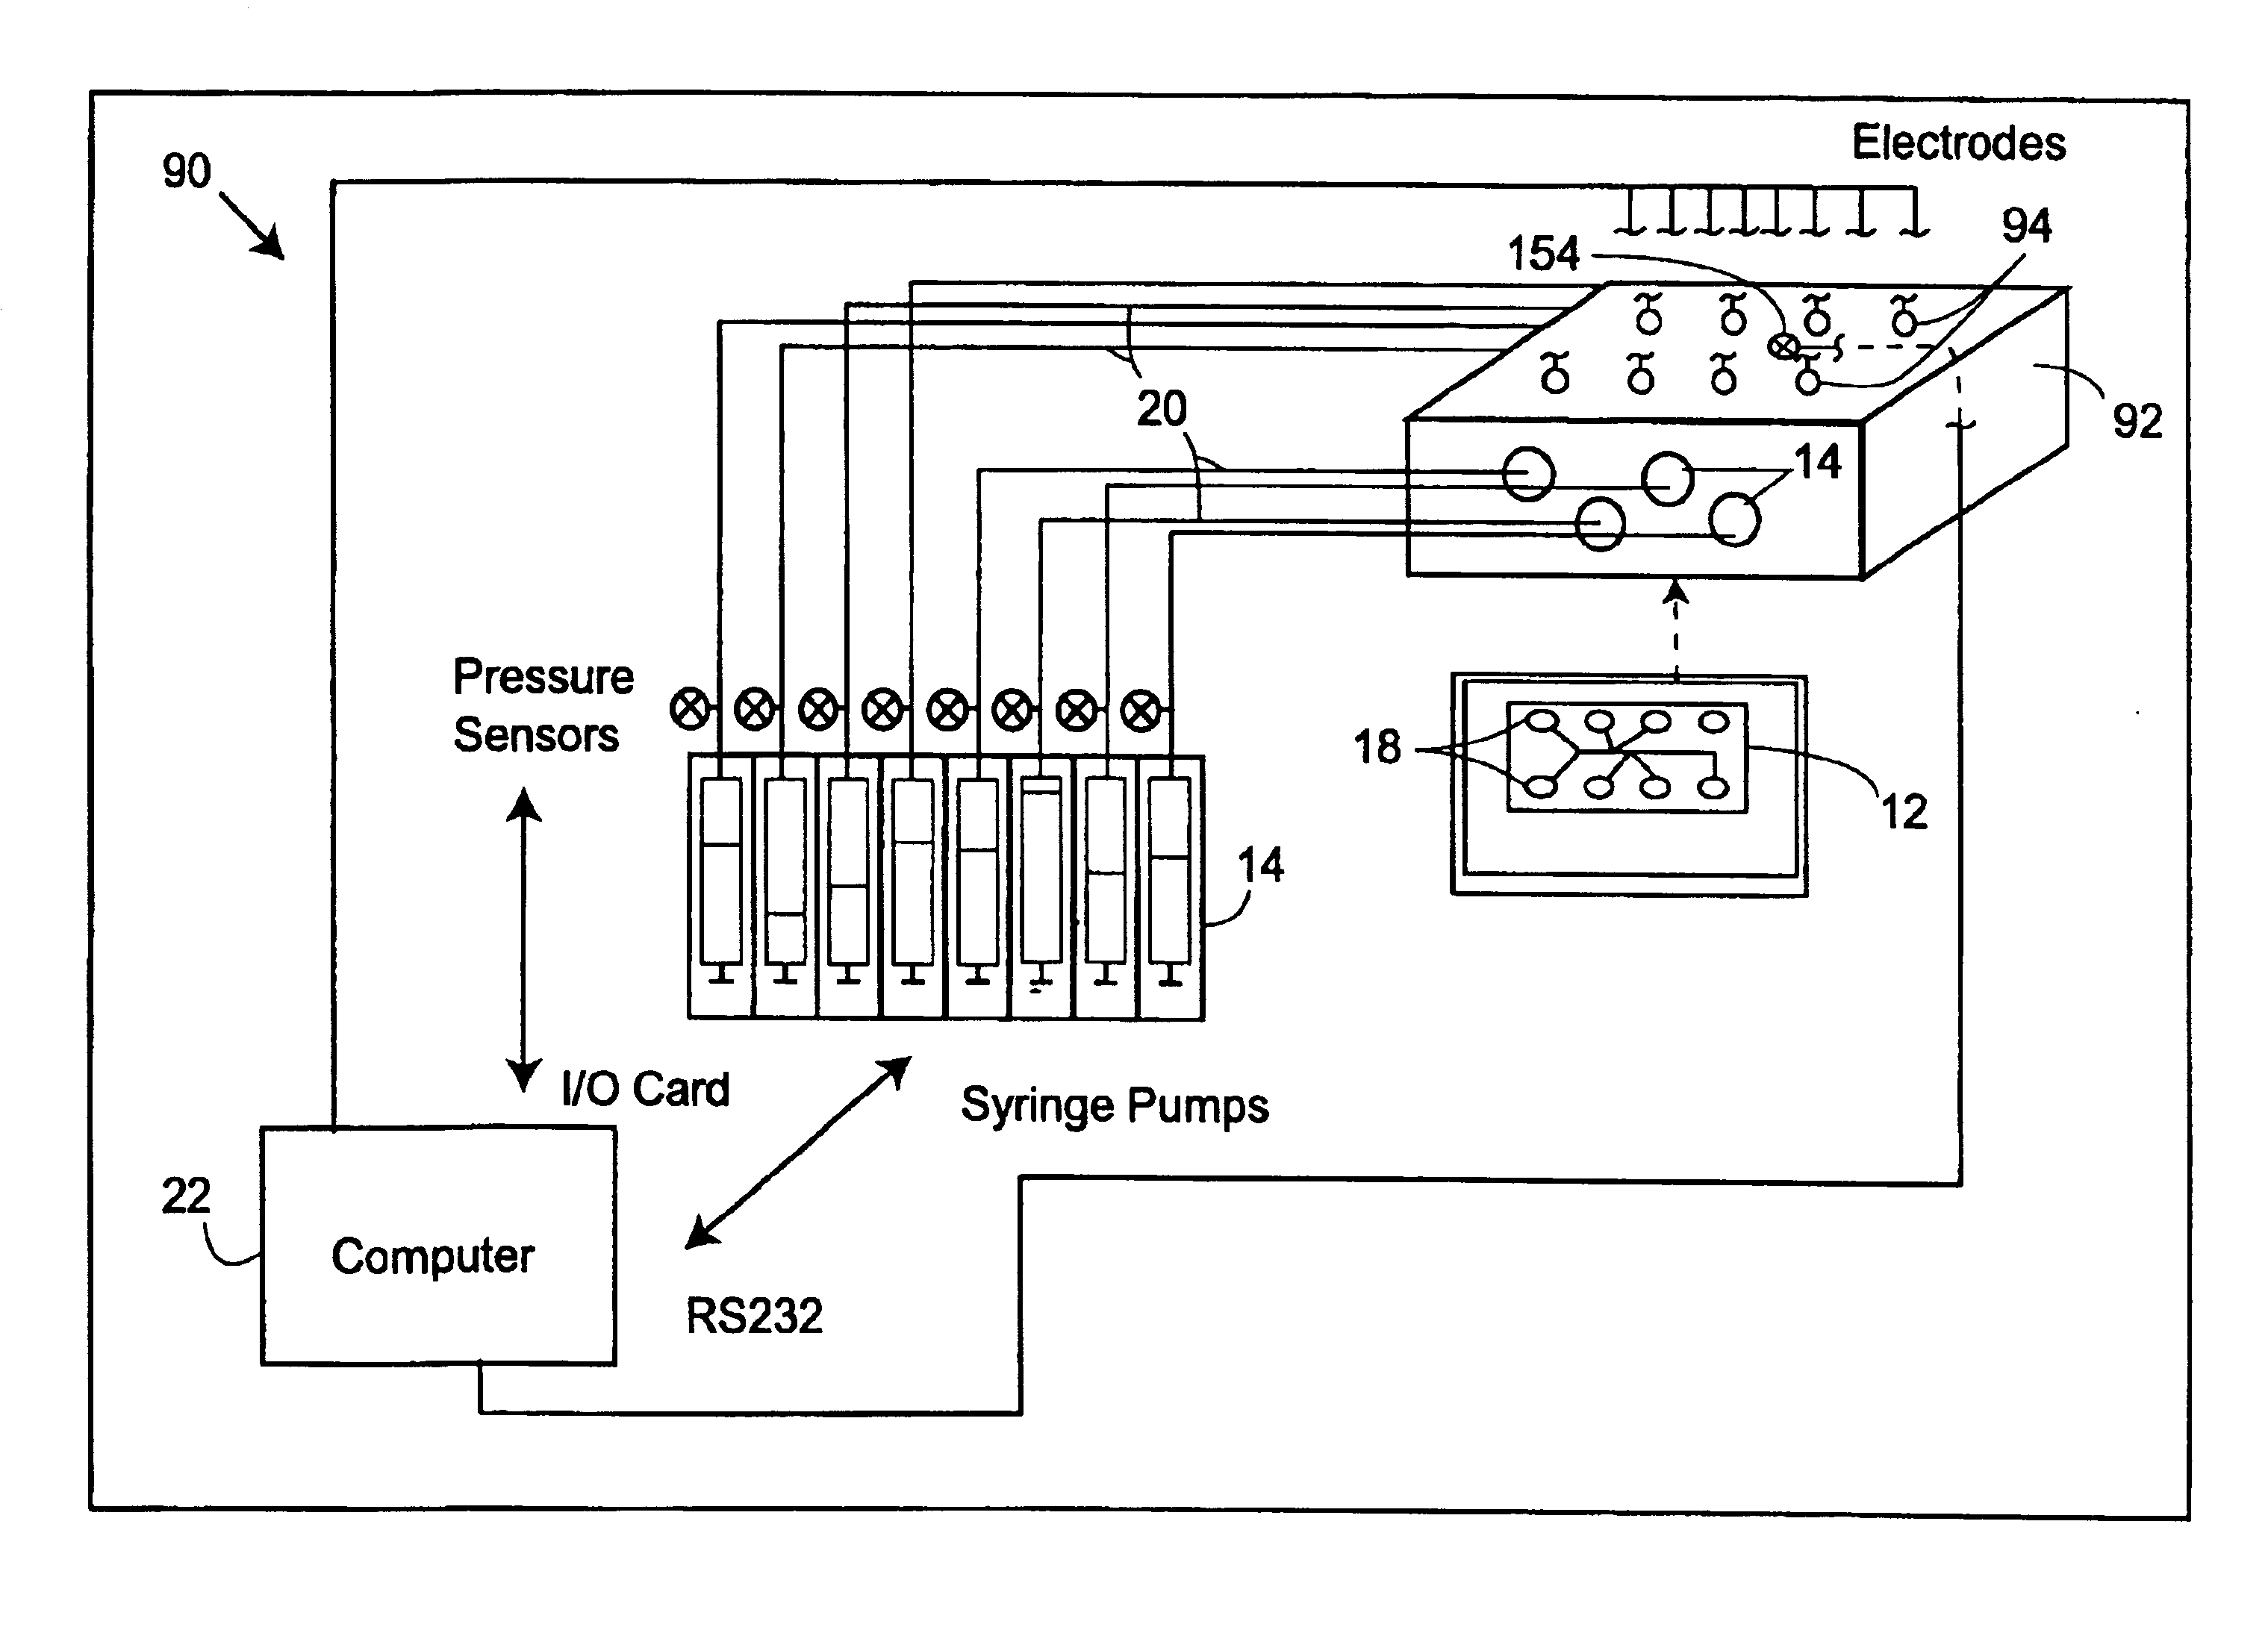 Multi-reservoir pressure control system